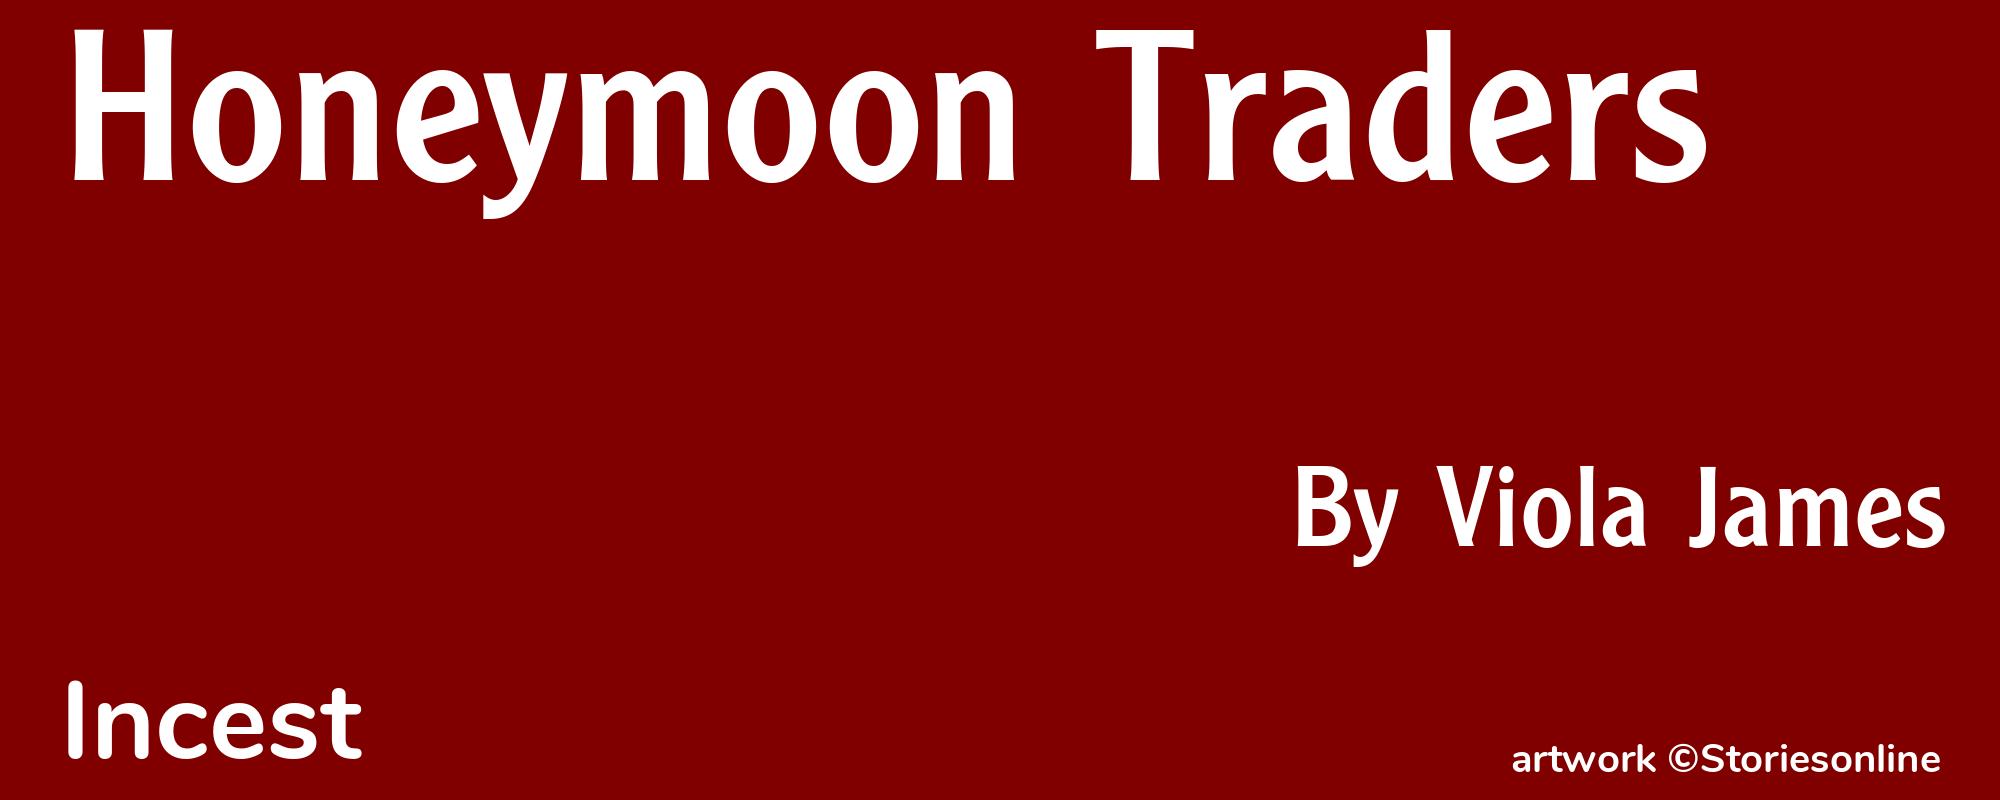 Honeymoon Traders - Cover